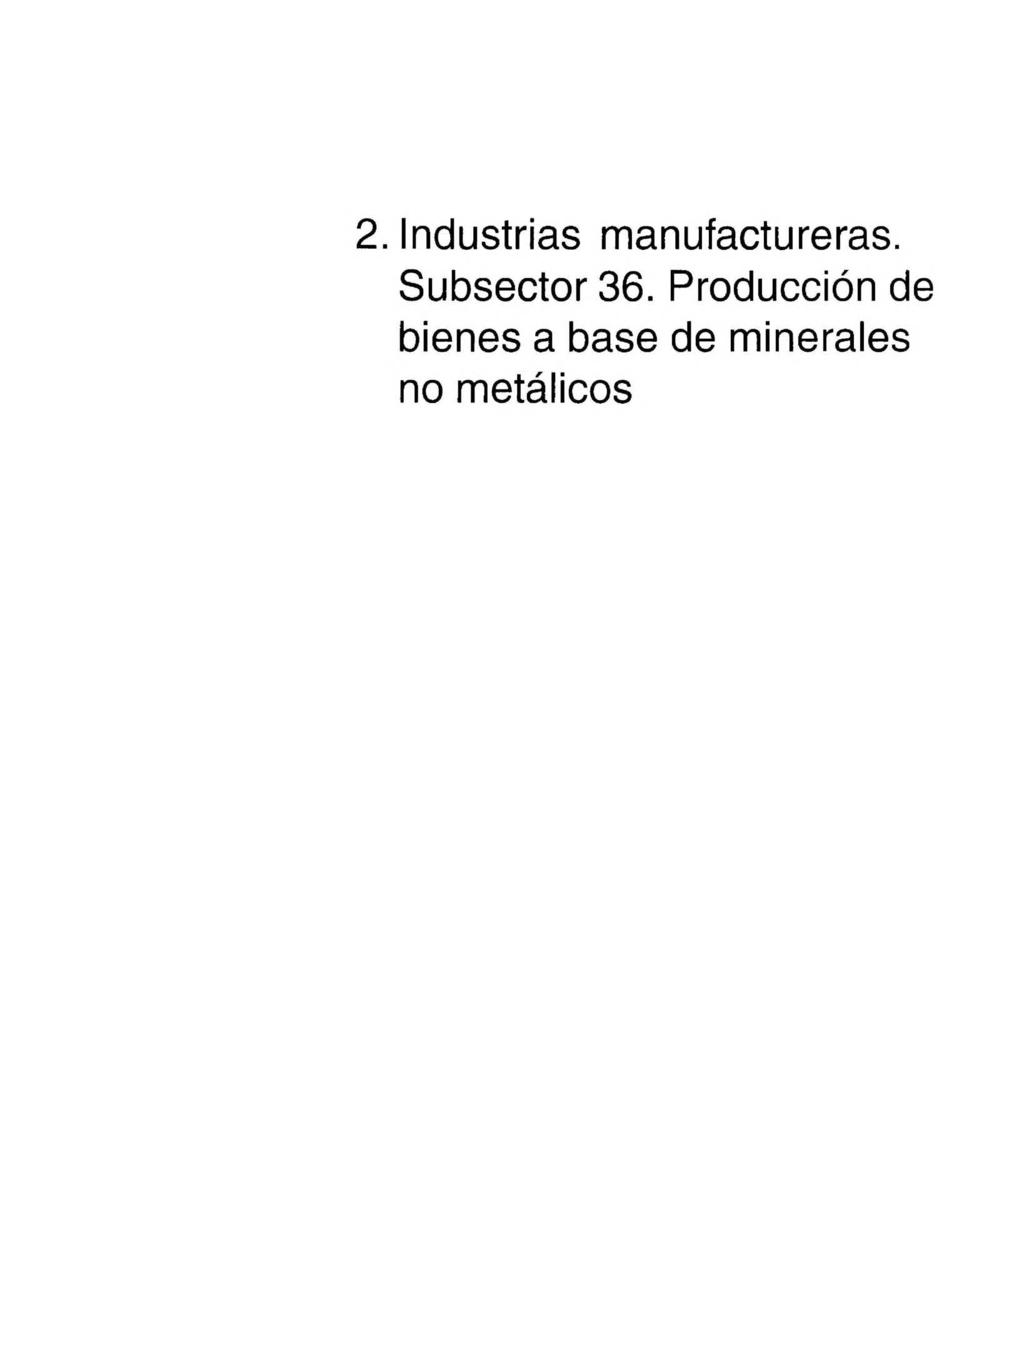 2. Industrias manufactureras. Subsector 3.